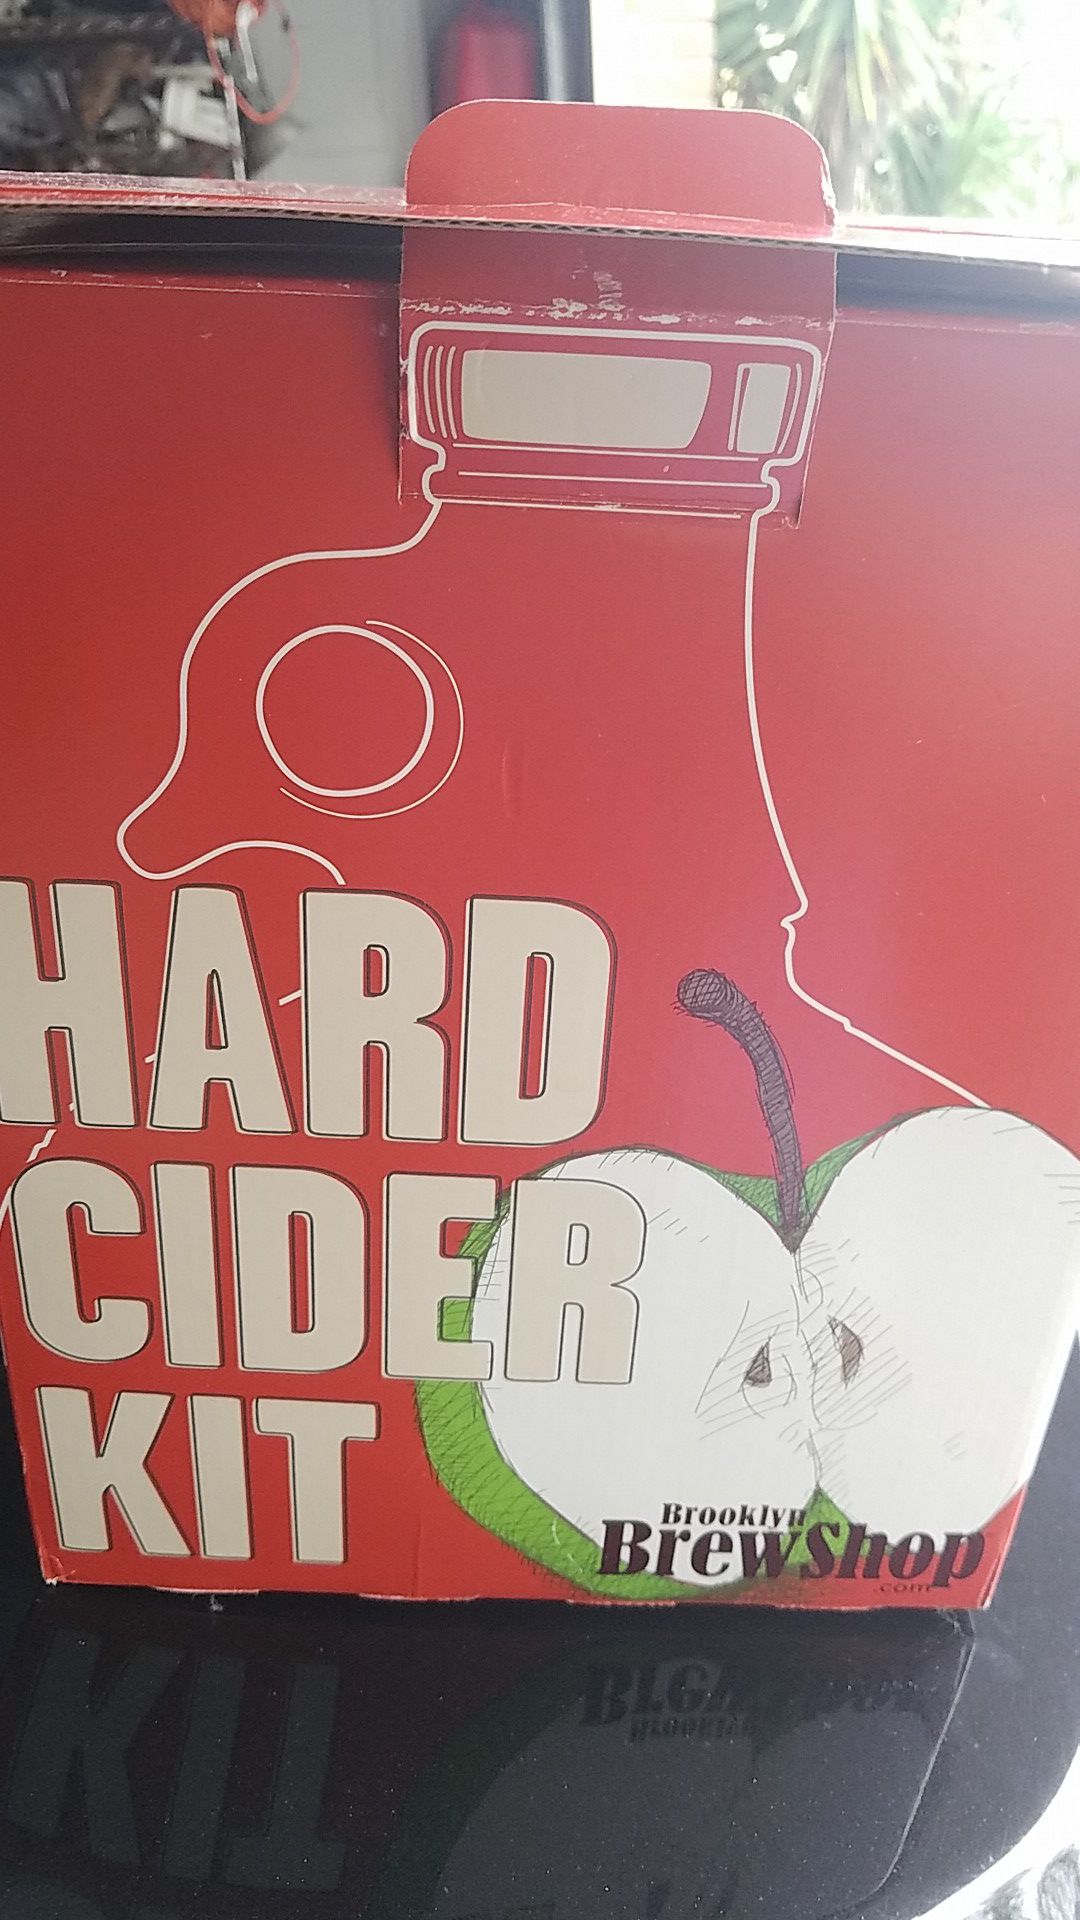 Hard Cyder kit